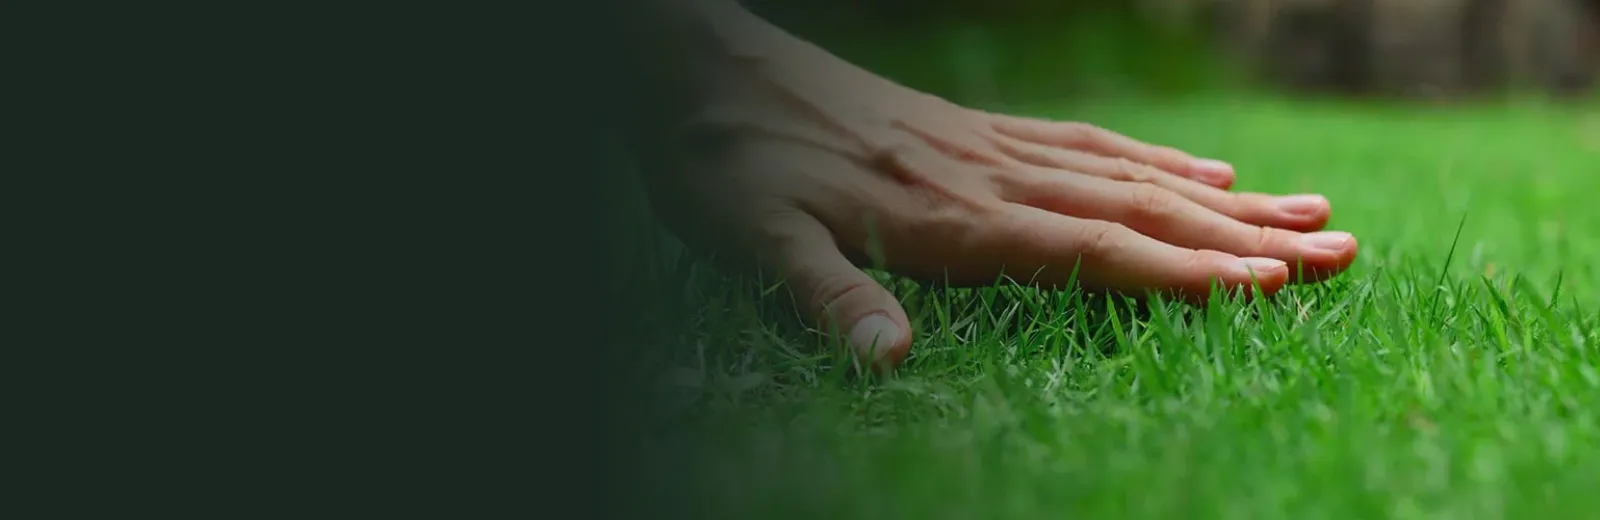 Touching soft healthy green grass